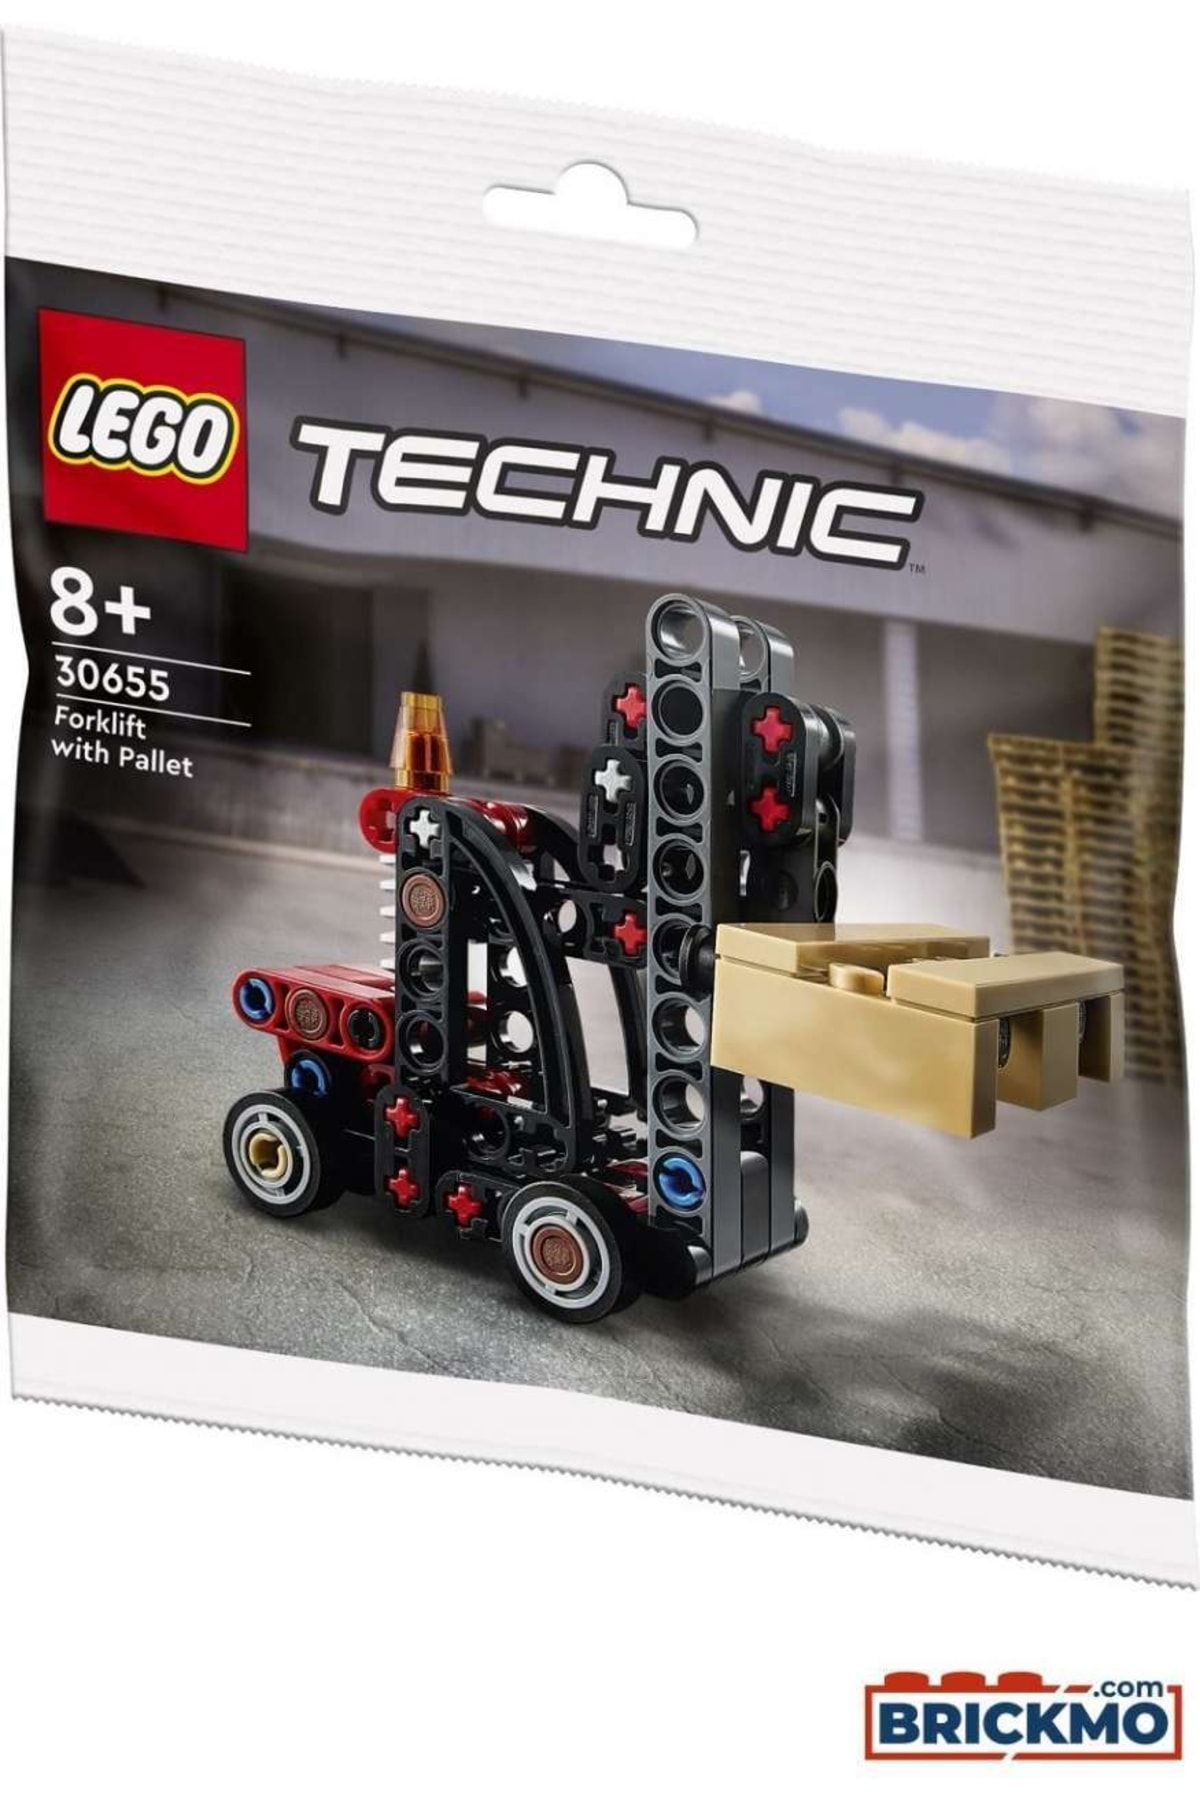 LEGO 30655 Paletli Forklift